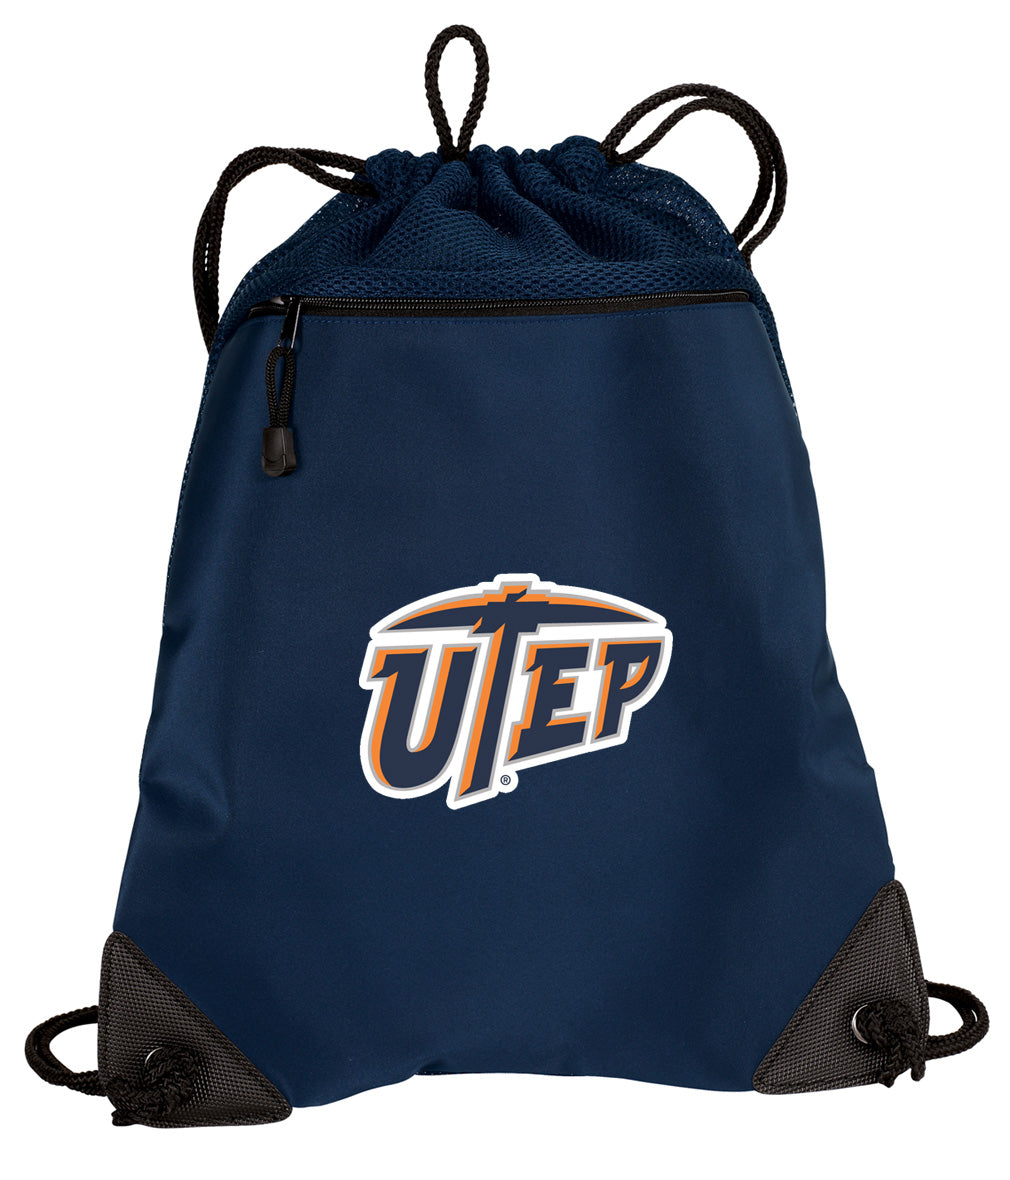 UTEP Drawstring Backpack University of Texas El Paso Cinch Pack - Mesh & Microfiber